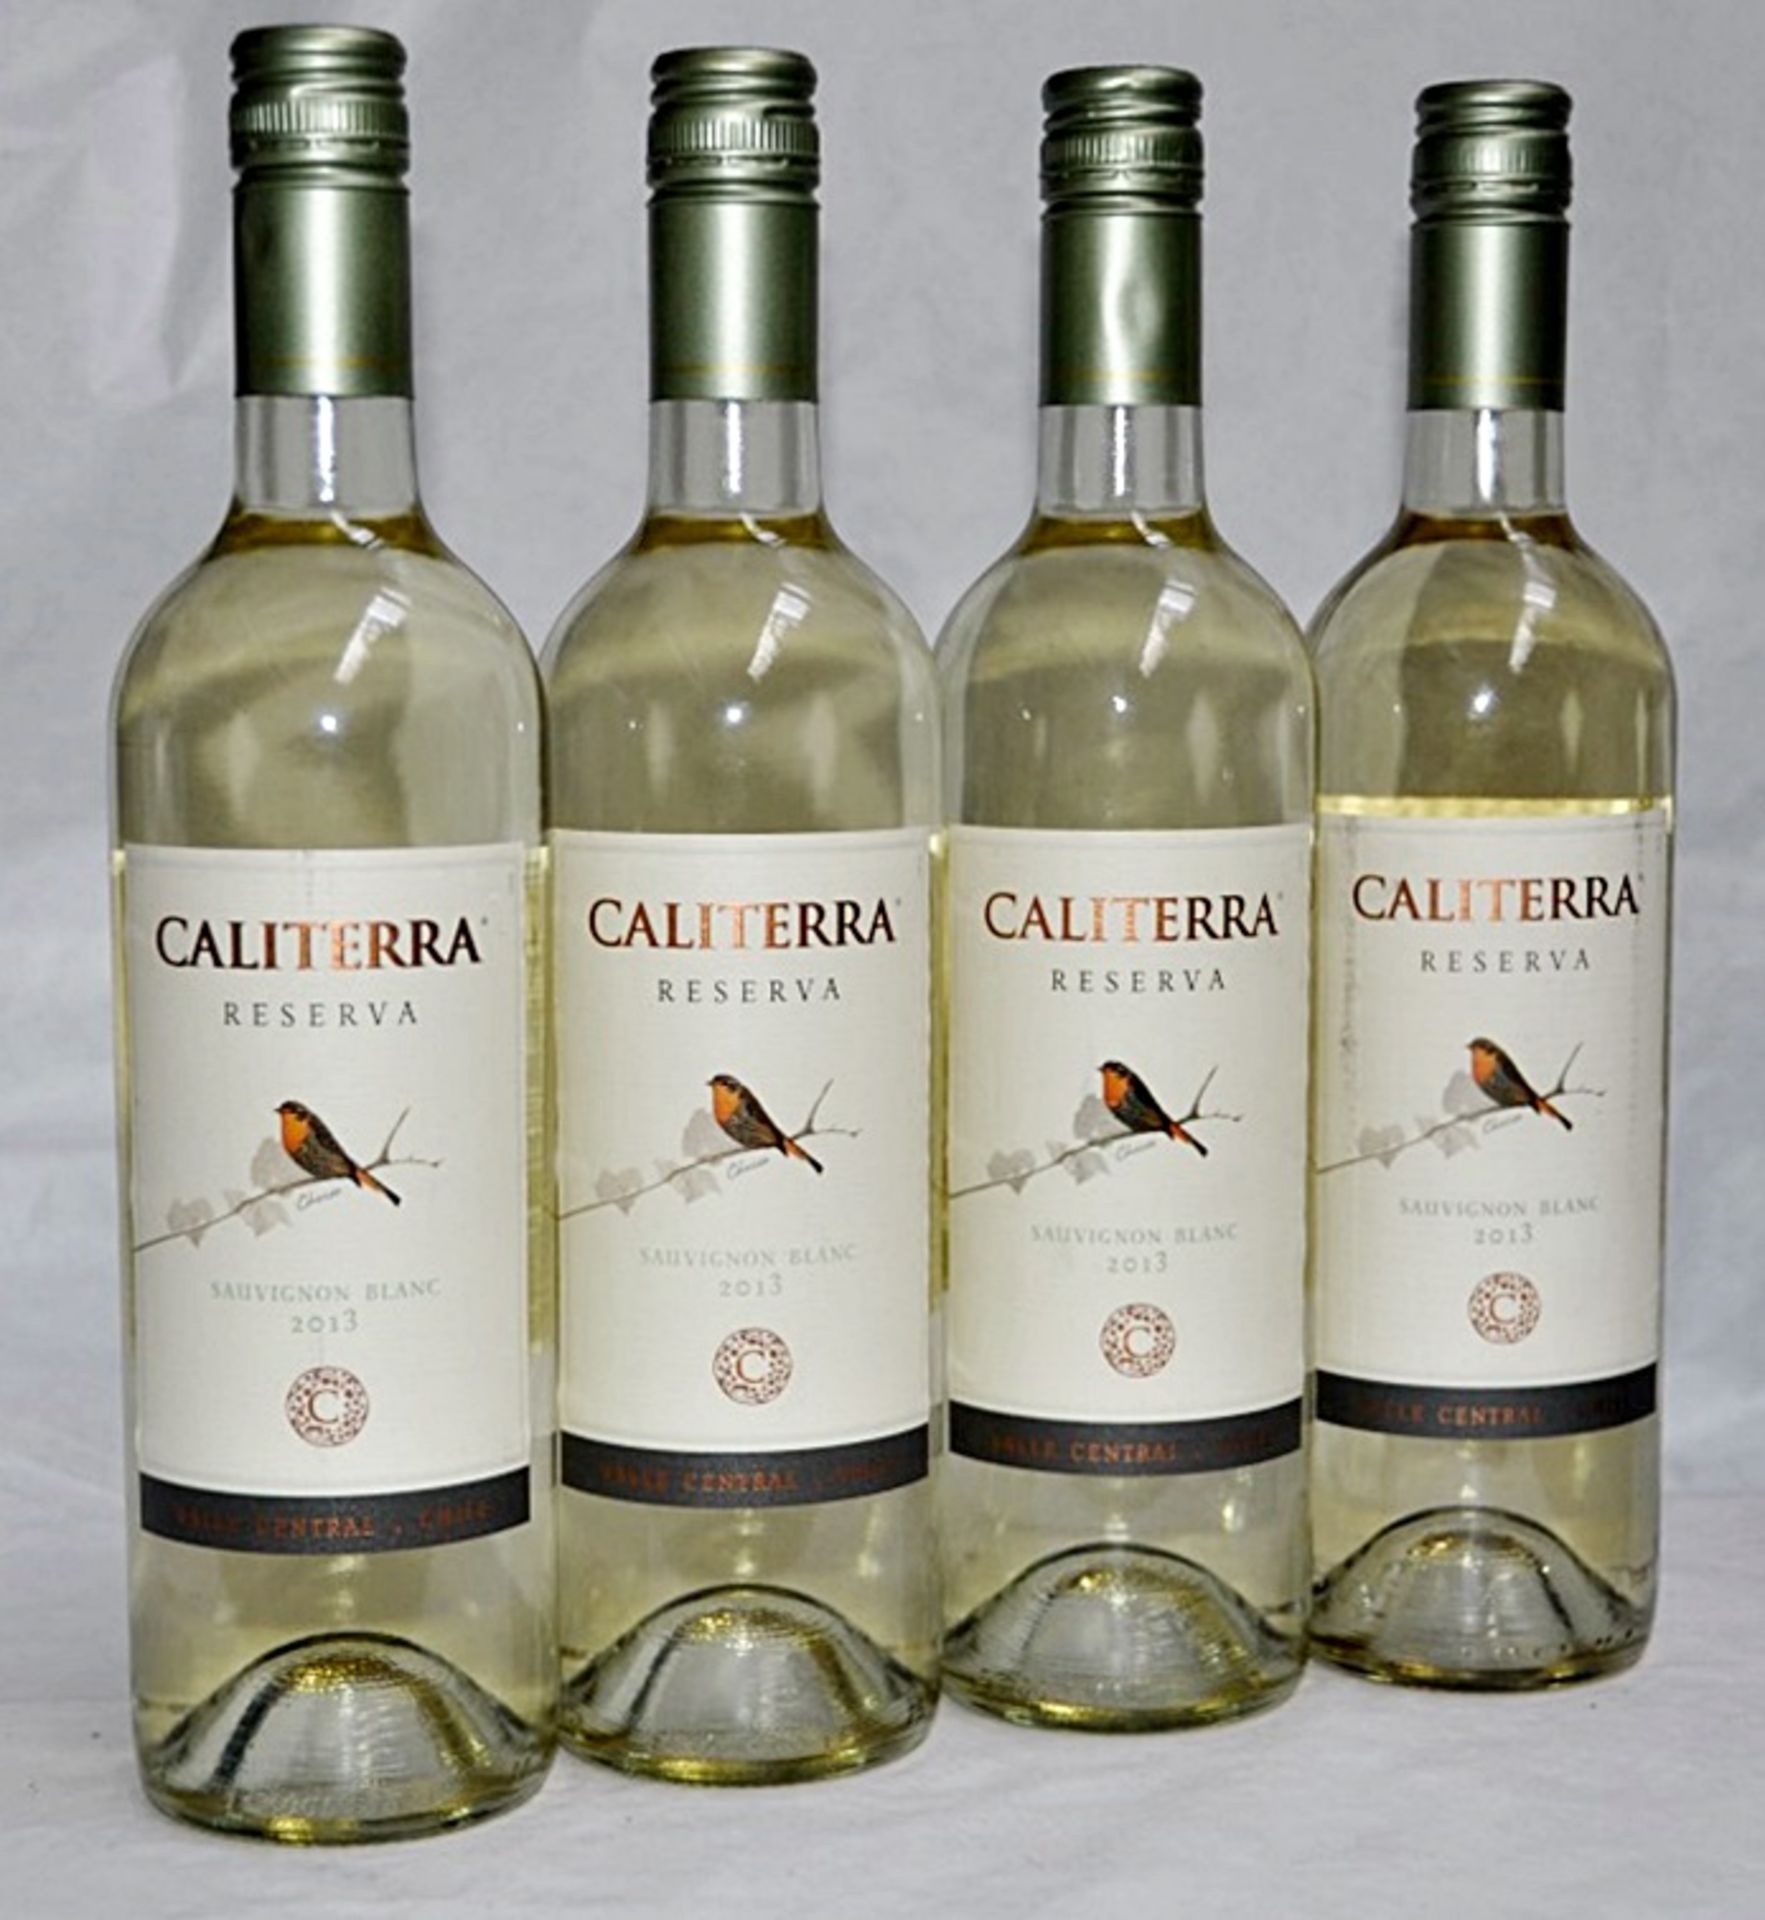 4 x 2013 Caliterra Reserva Sauvignon Blanc, Curico Valley, Chile - 2013 – Bottle Size 75cl -